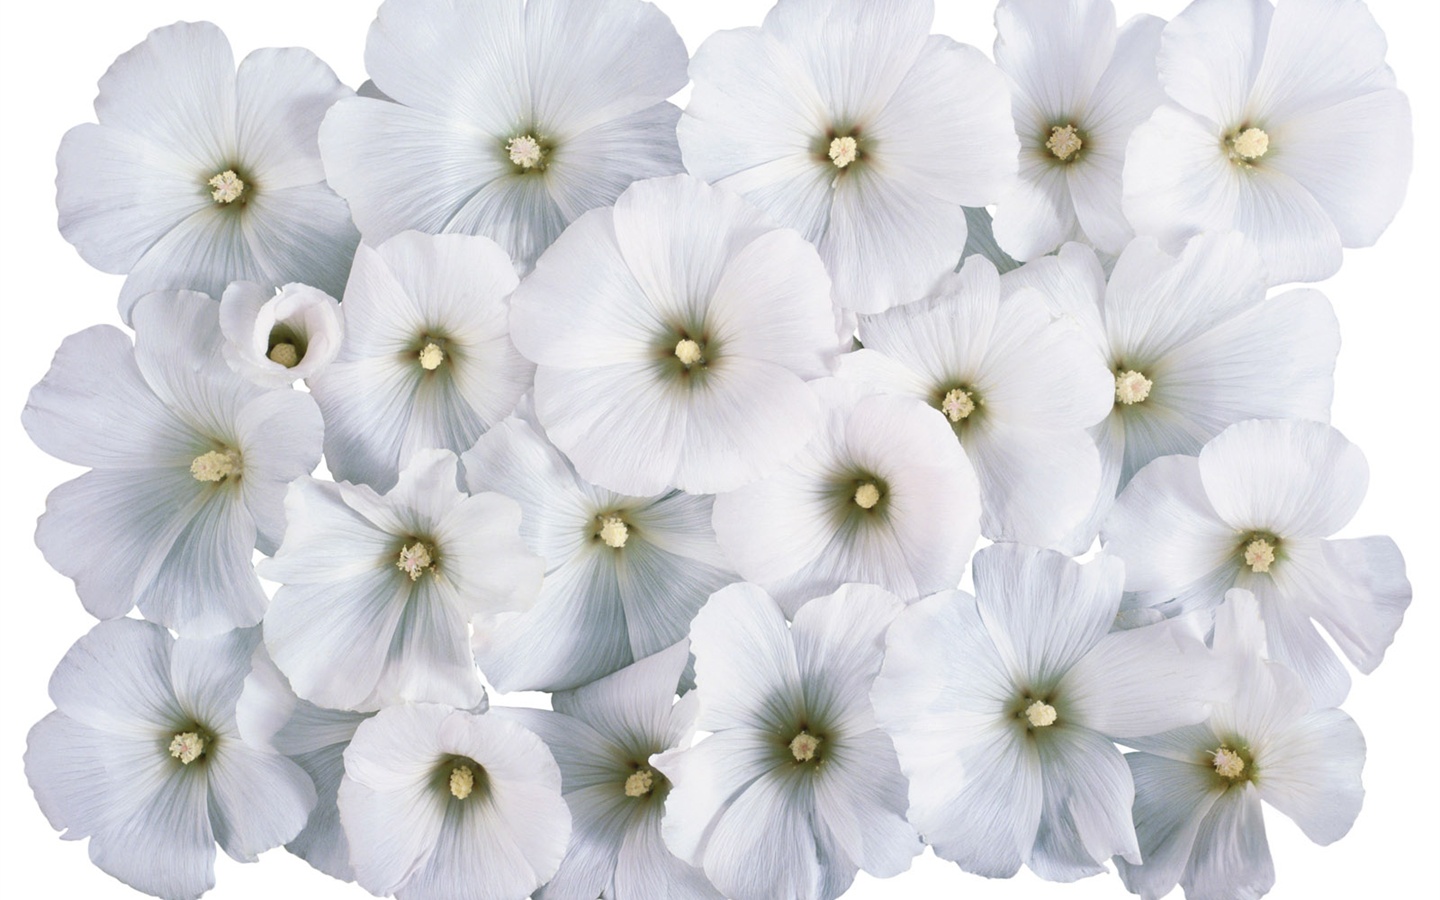 Snow-white flowers wallpaper #4 - 1440x900